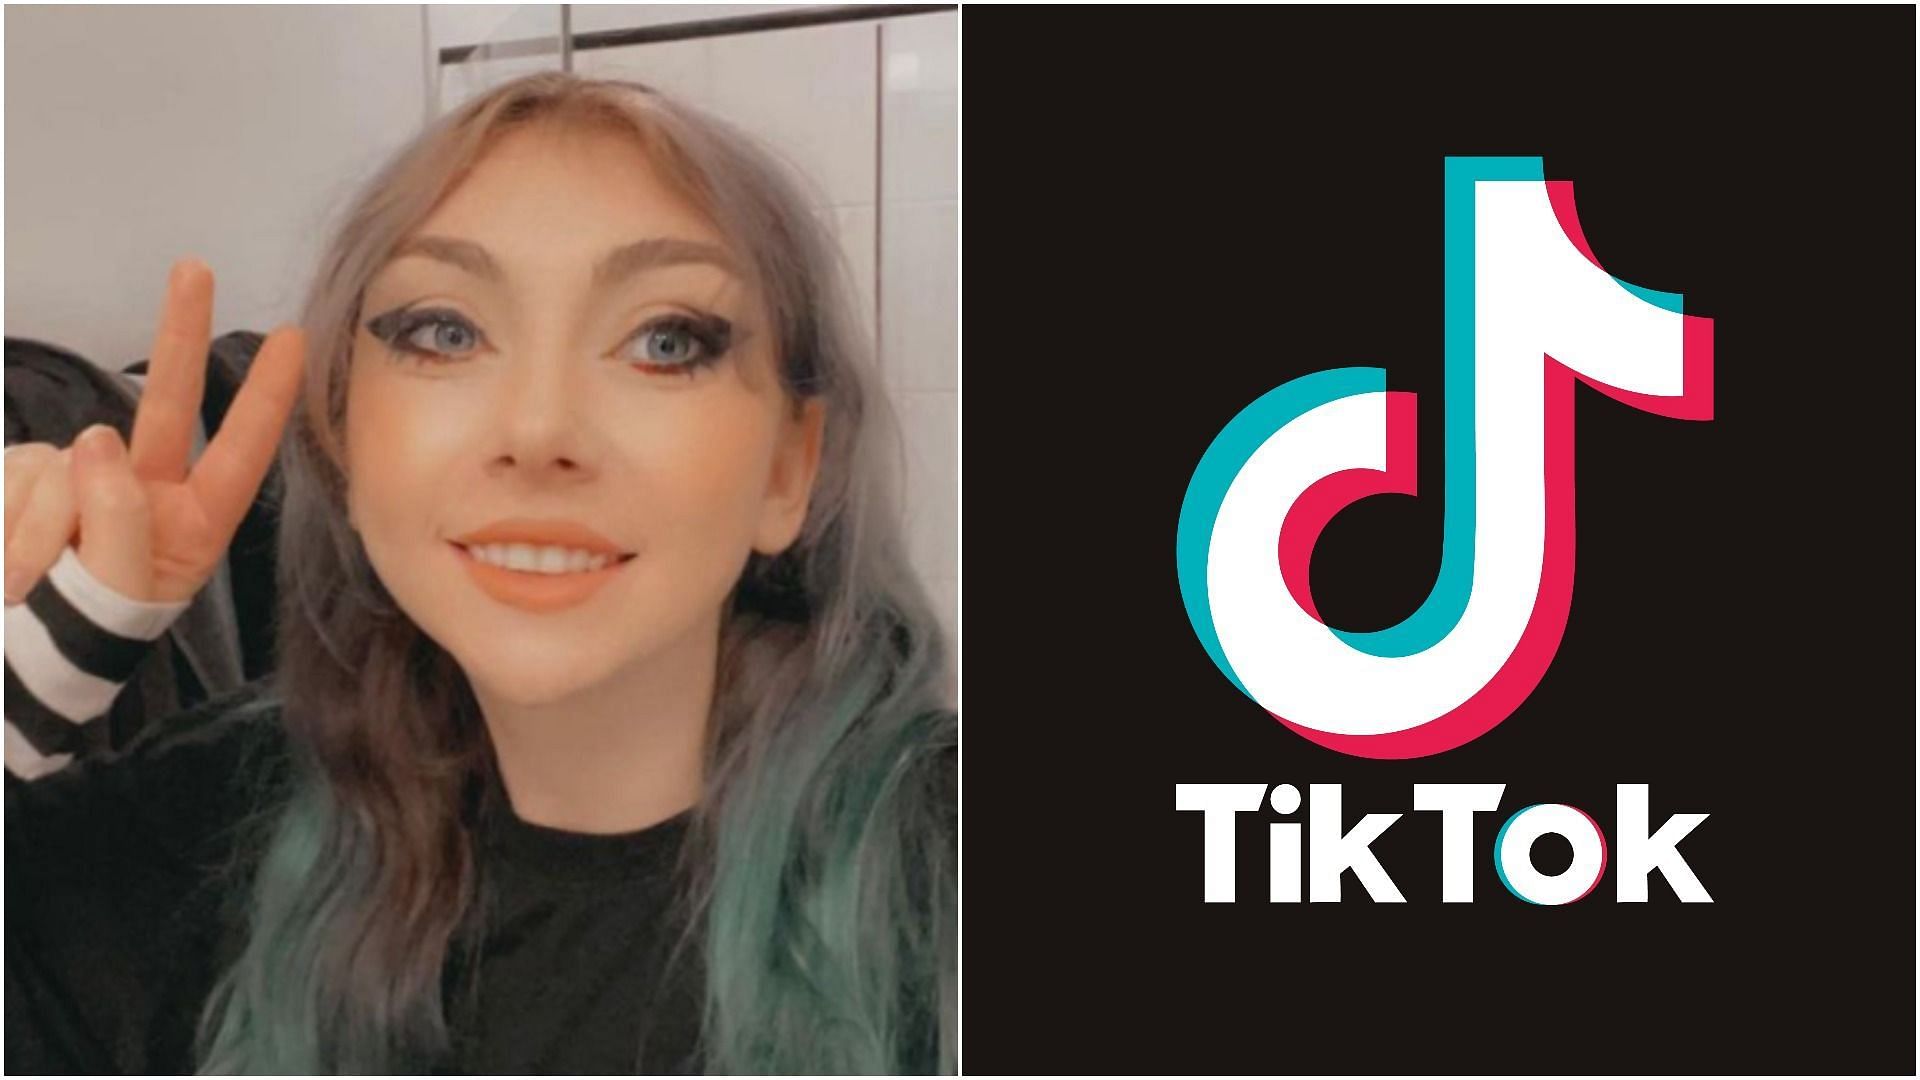 JustaMinx reveals she's received 3 TikTok bans in one month